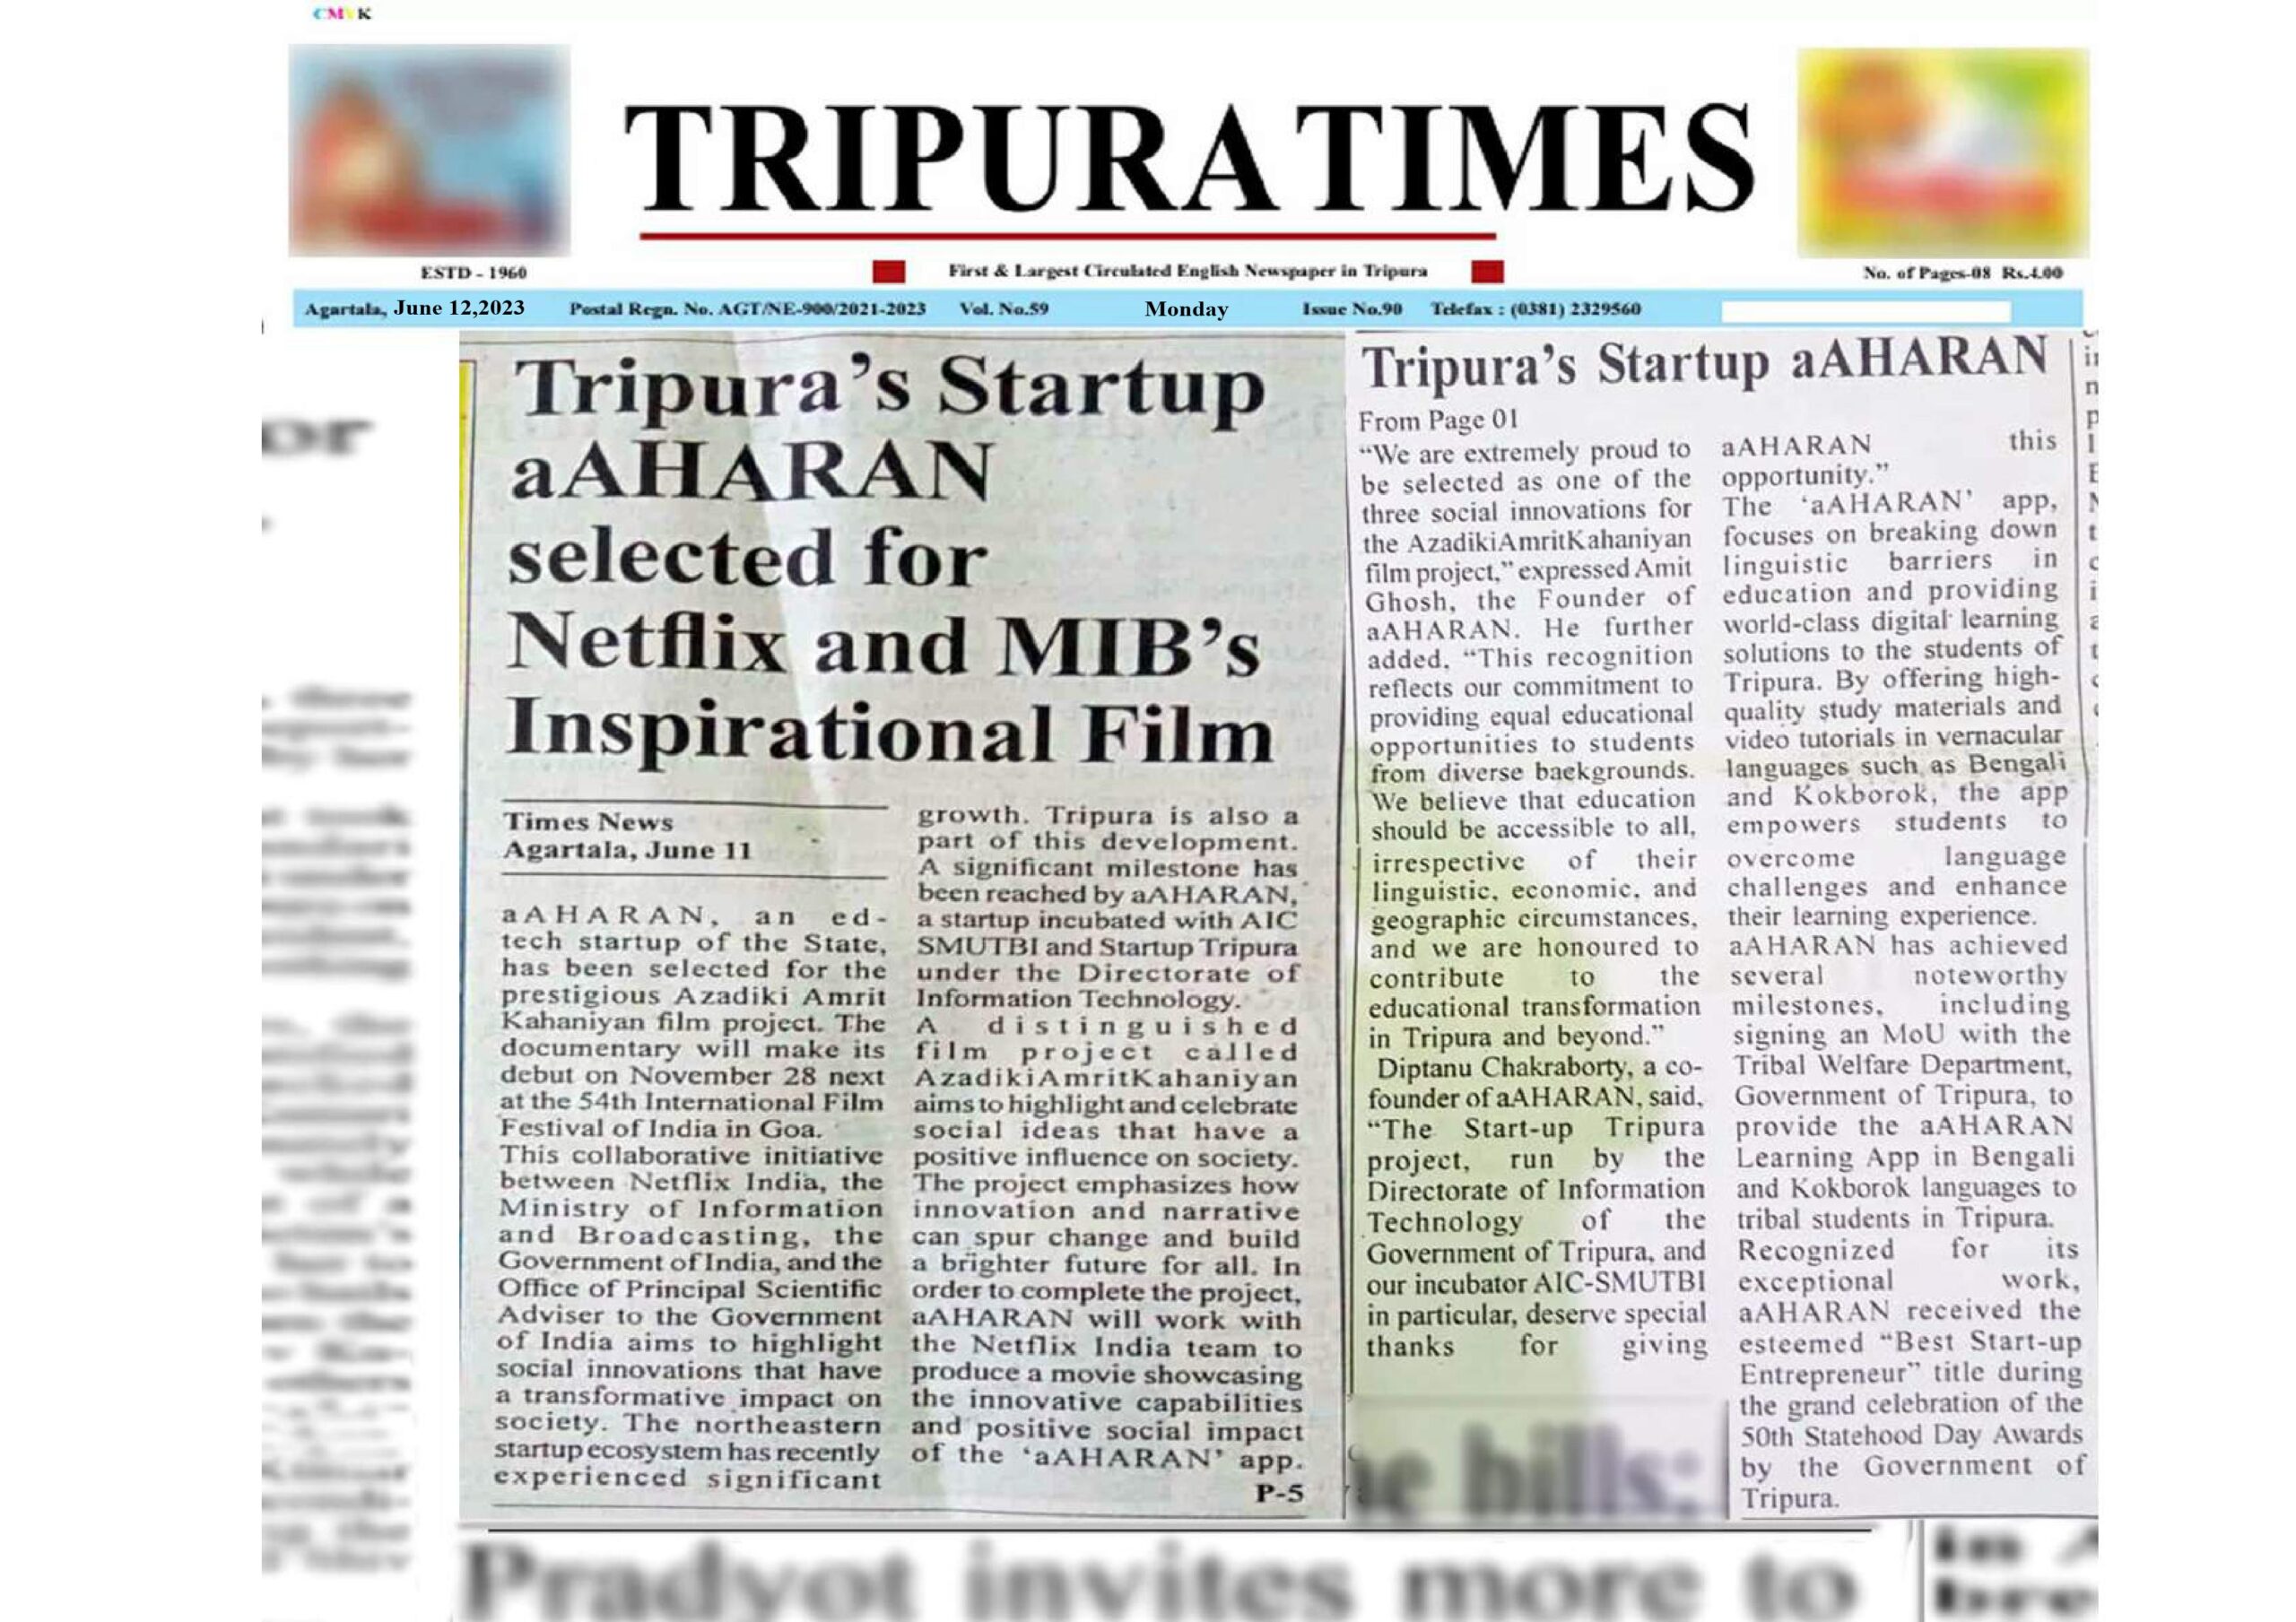 CMO Tripura tweet about aAHARAN award